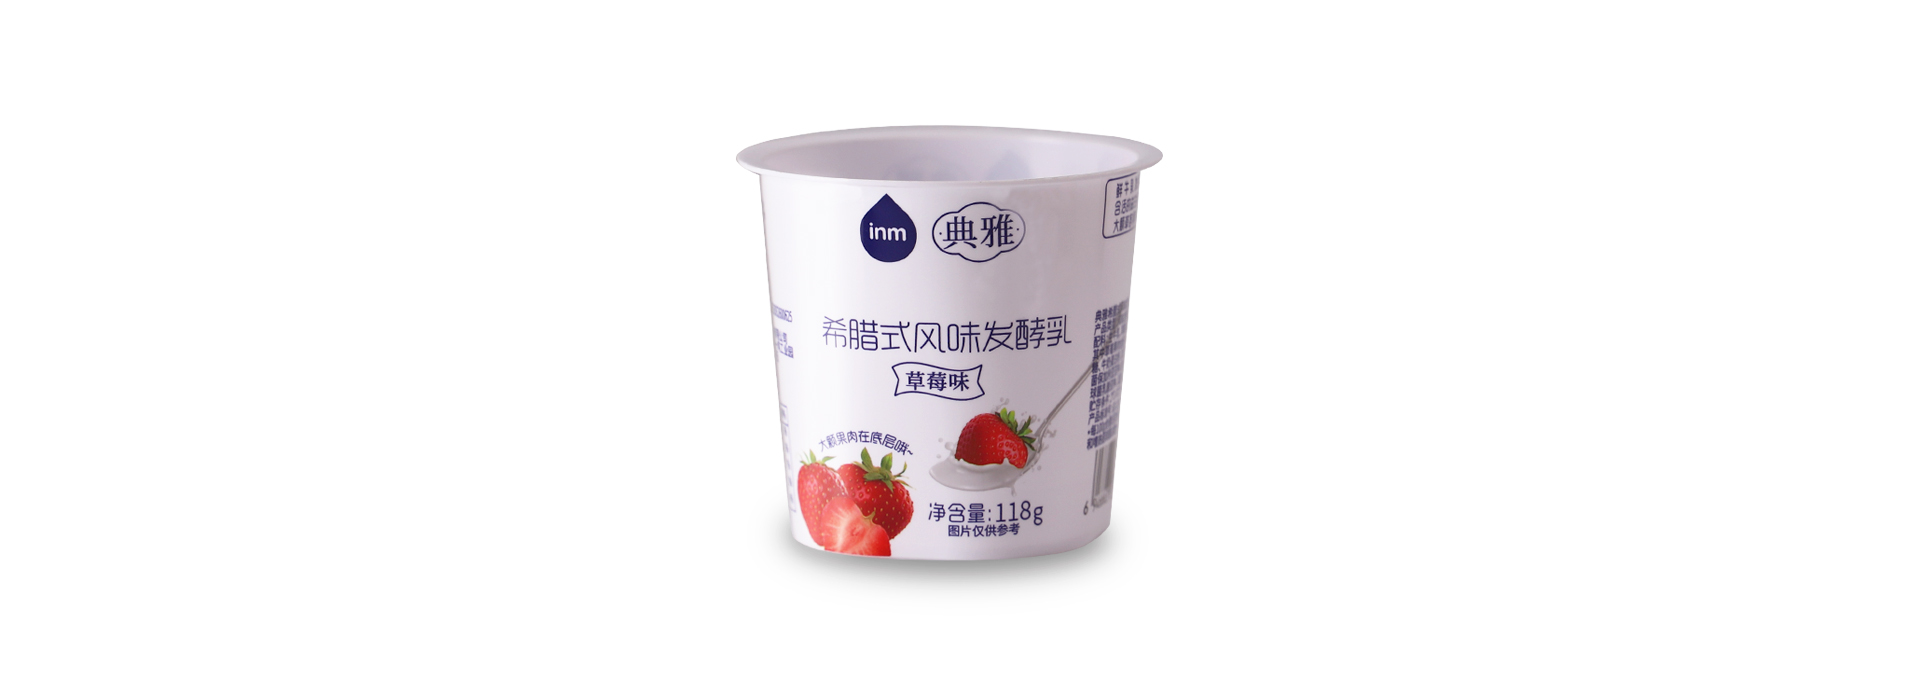 YM-125g yogurt cup (71 caliber)